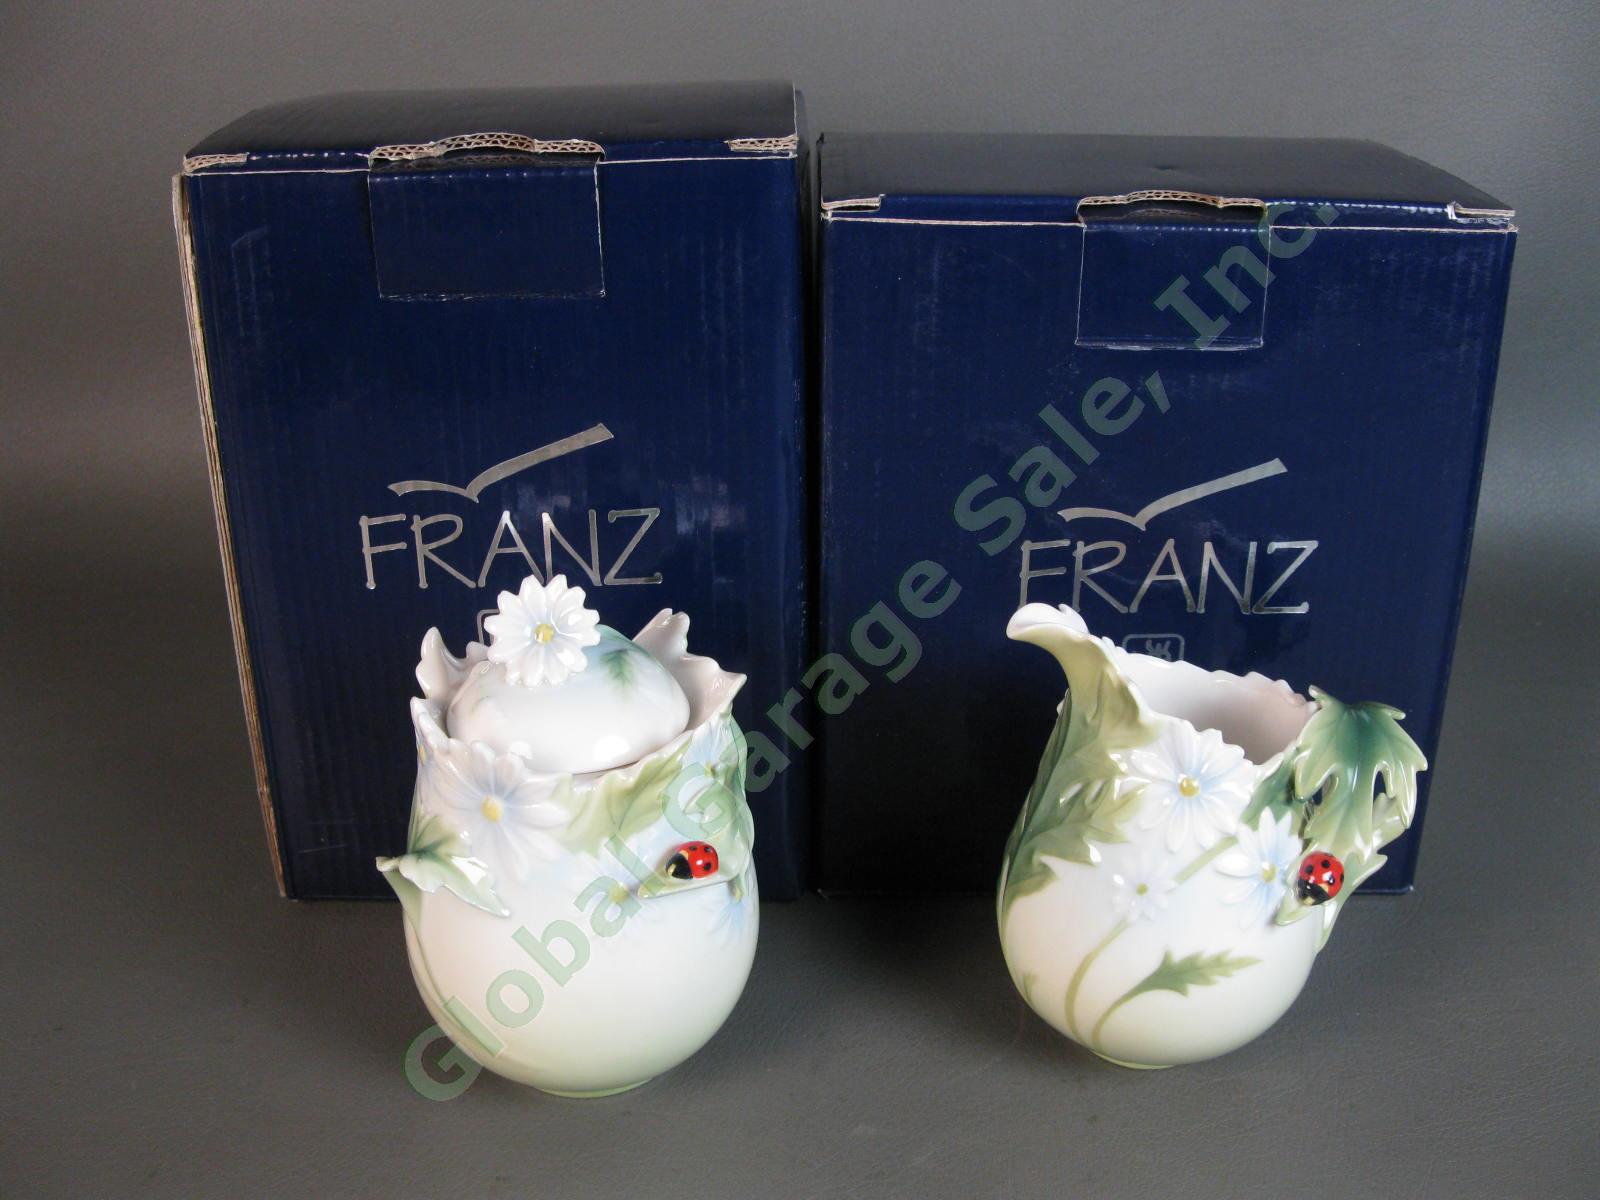 Franz Collection Ladybug Design Porcelain Creamer & Sugar Jar Set FZ00400 Daises